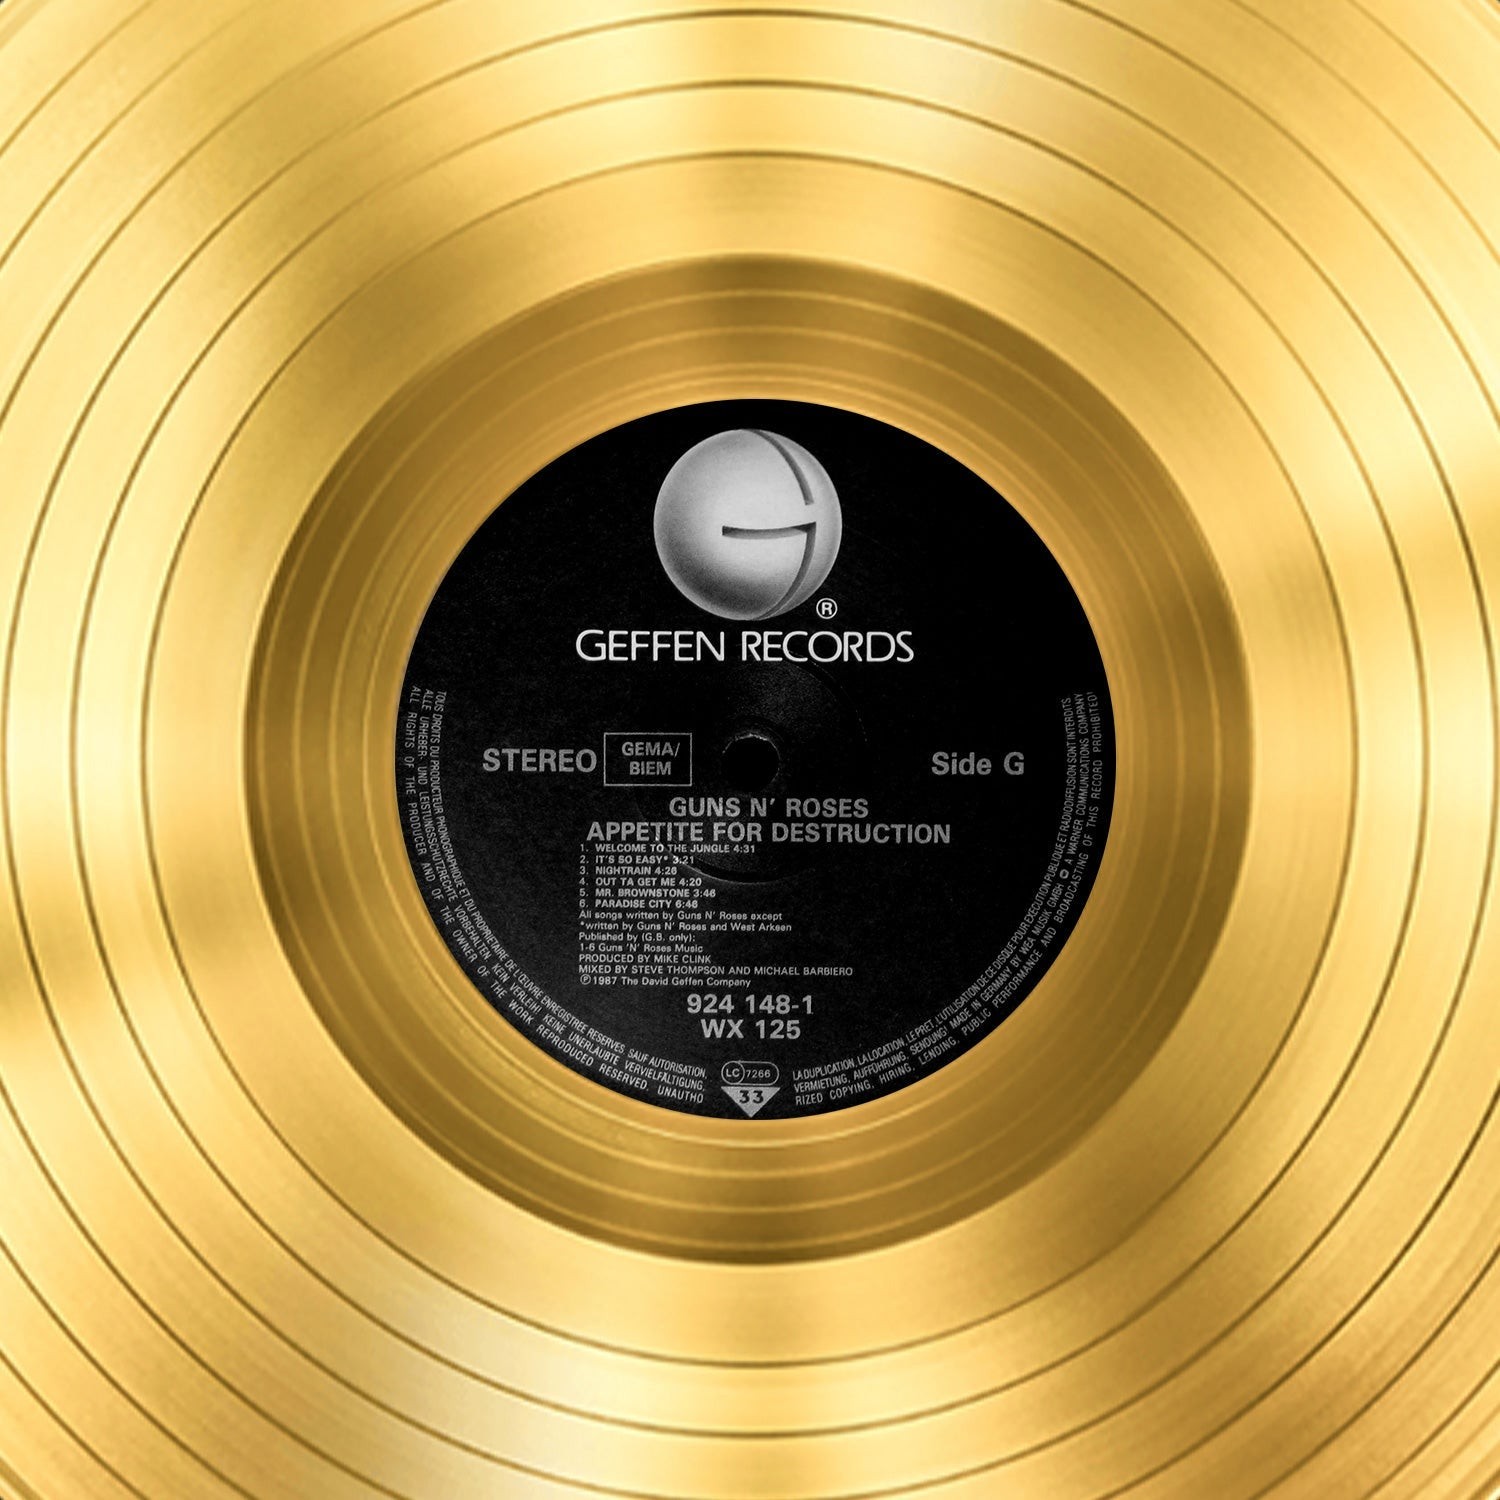 Vinyl Gold 5: Guns N' Roses - Axl Rose – Guns N' Roses Official Store